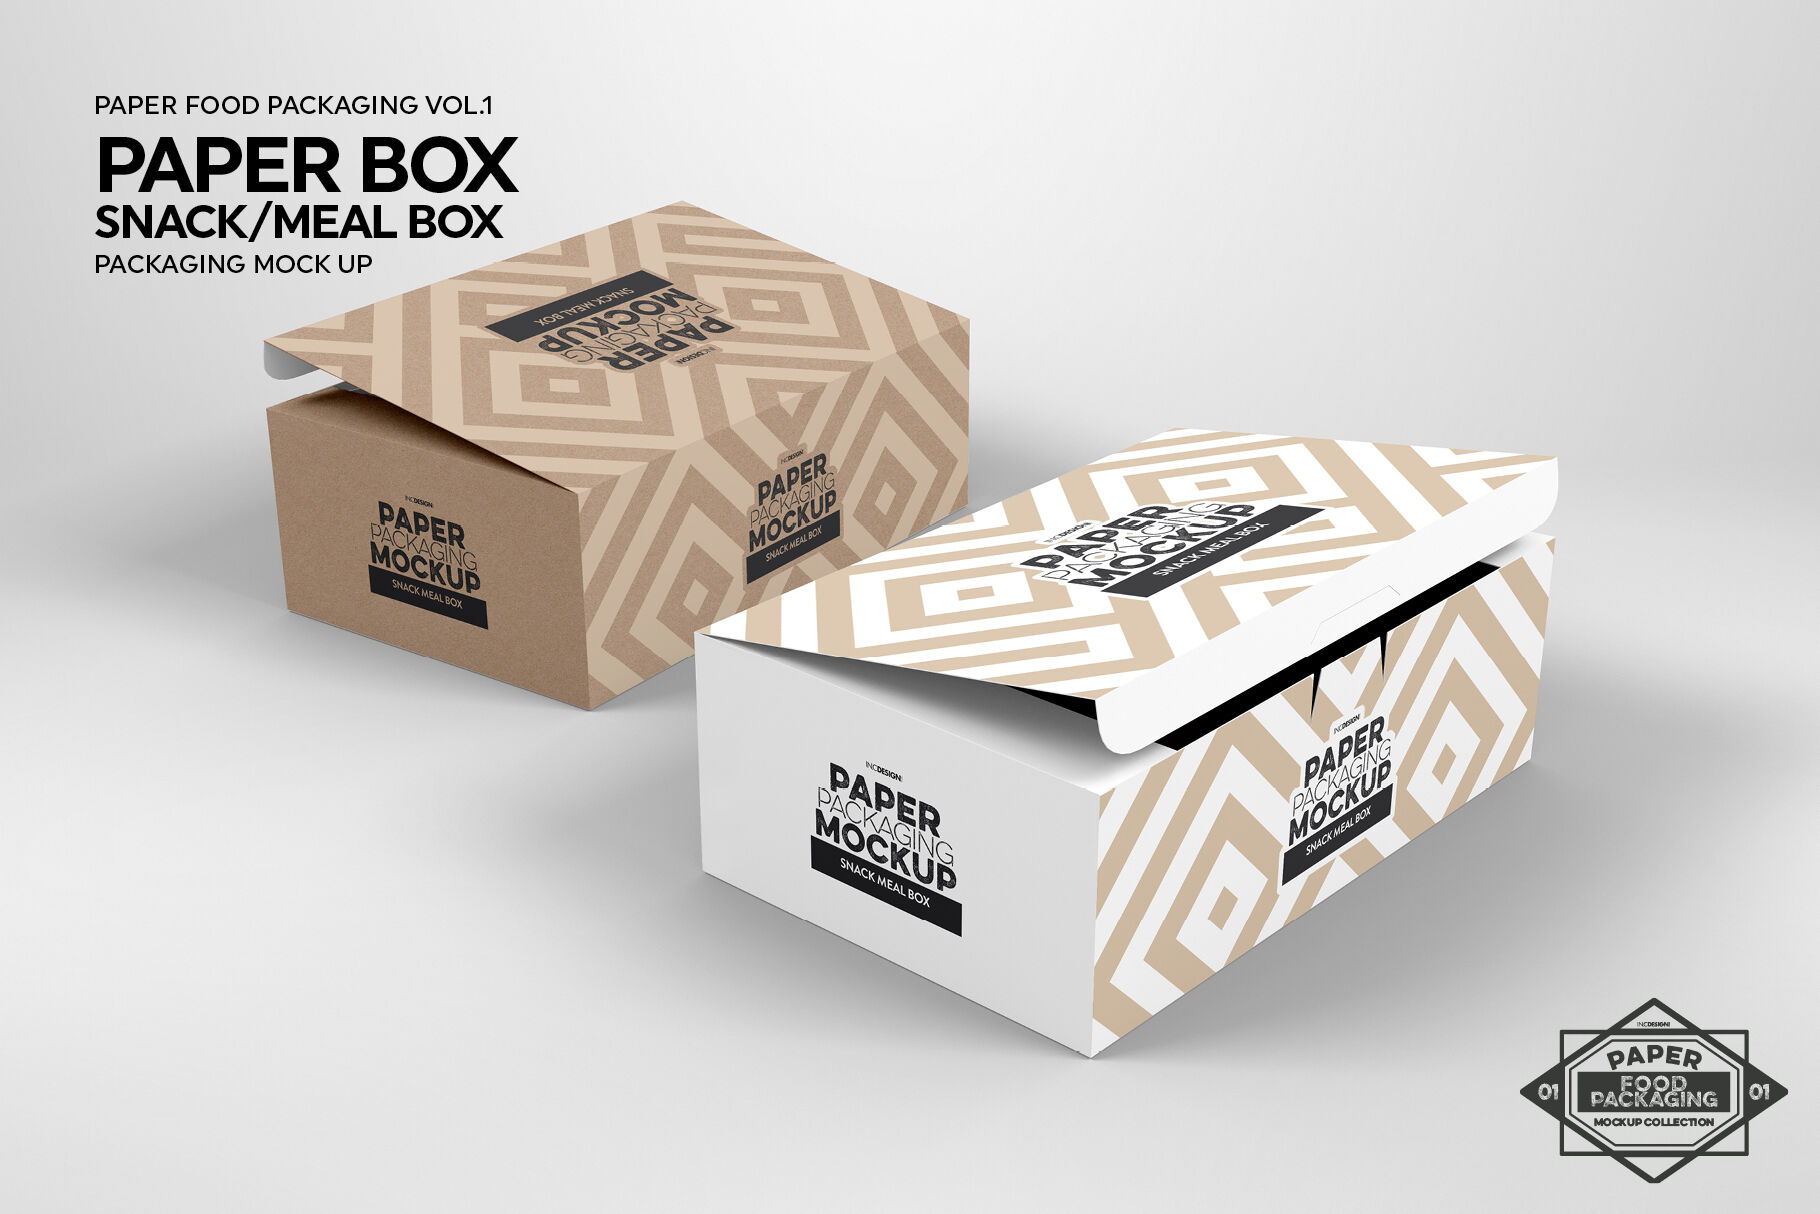 https://media1.thehungryjpeg.com/thumbs2/ori_36412_nuj8ky3zrcipmjic3jif19baa7iqykyndbchk56l_snack-or-meal-box-packaging-mockup.jpg